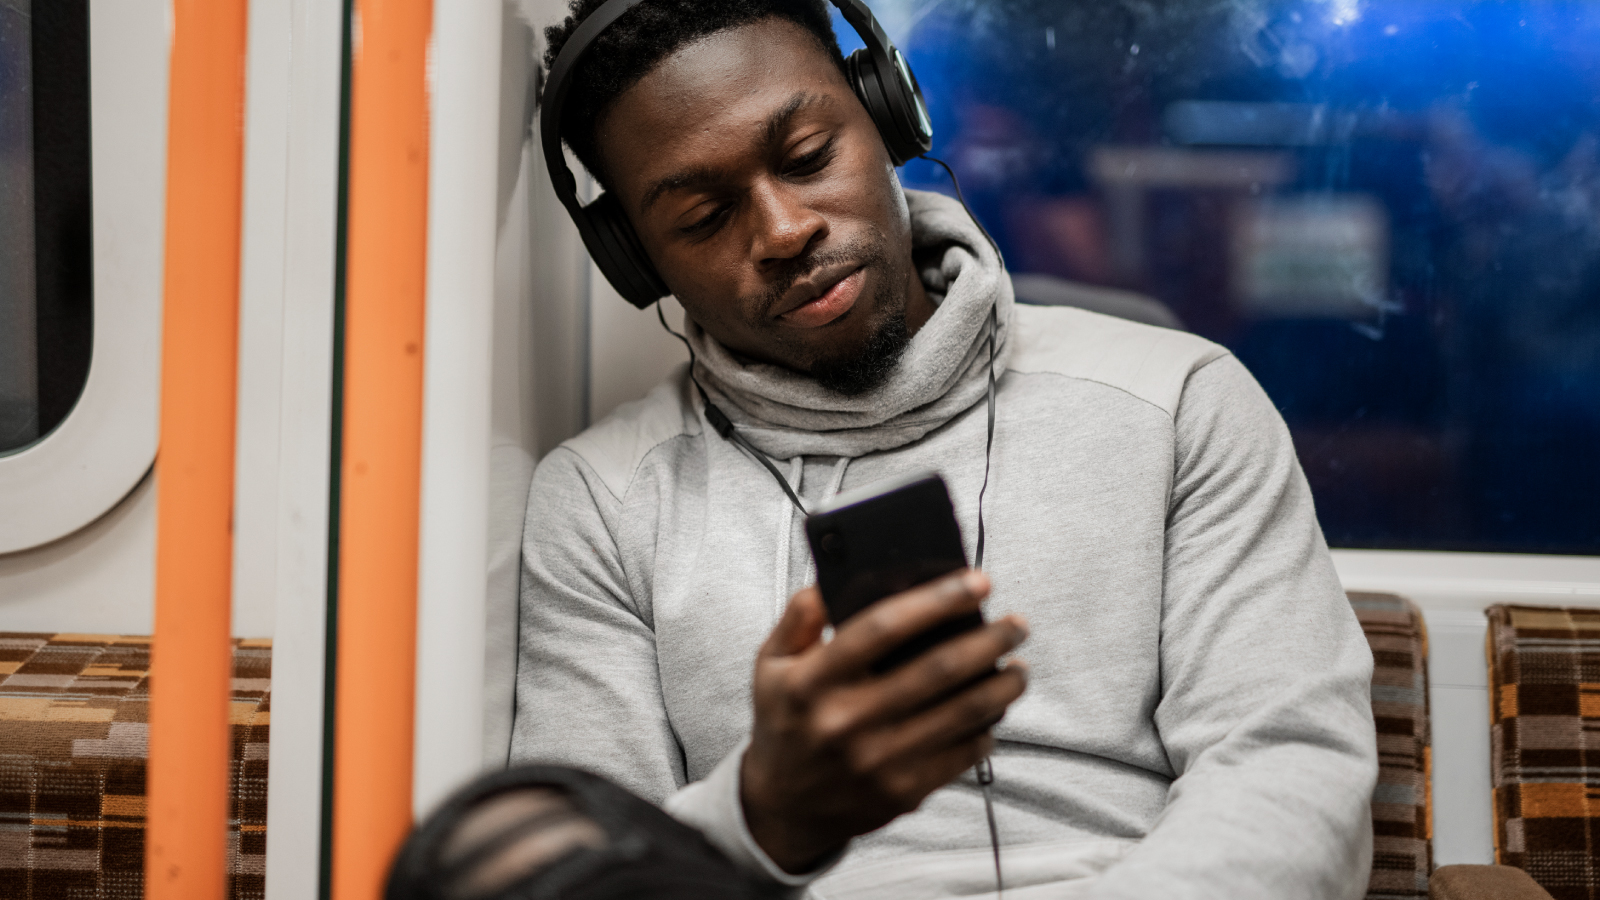 Person enjoying music using headphones 